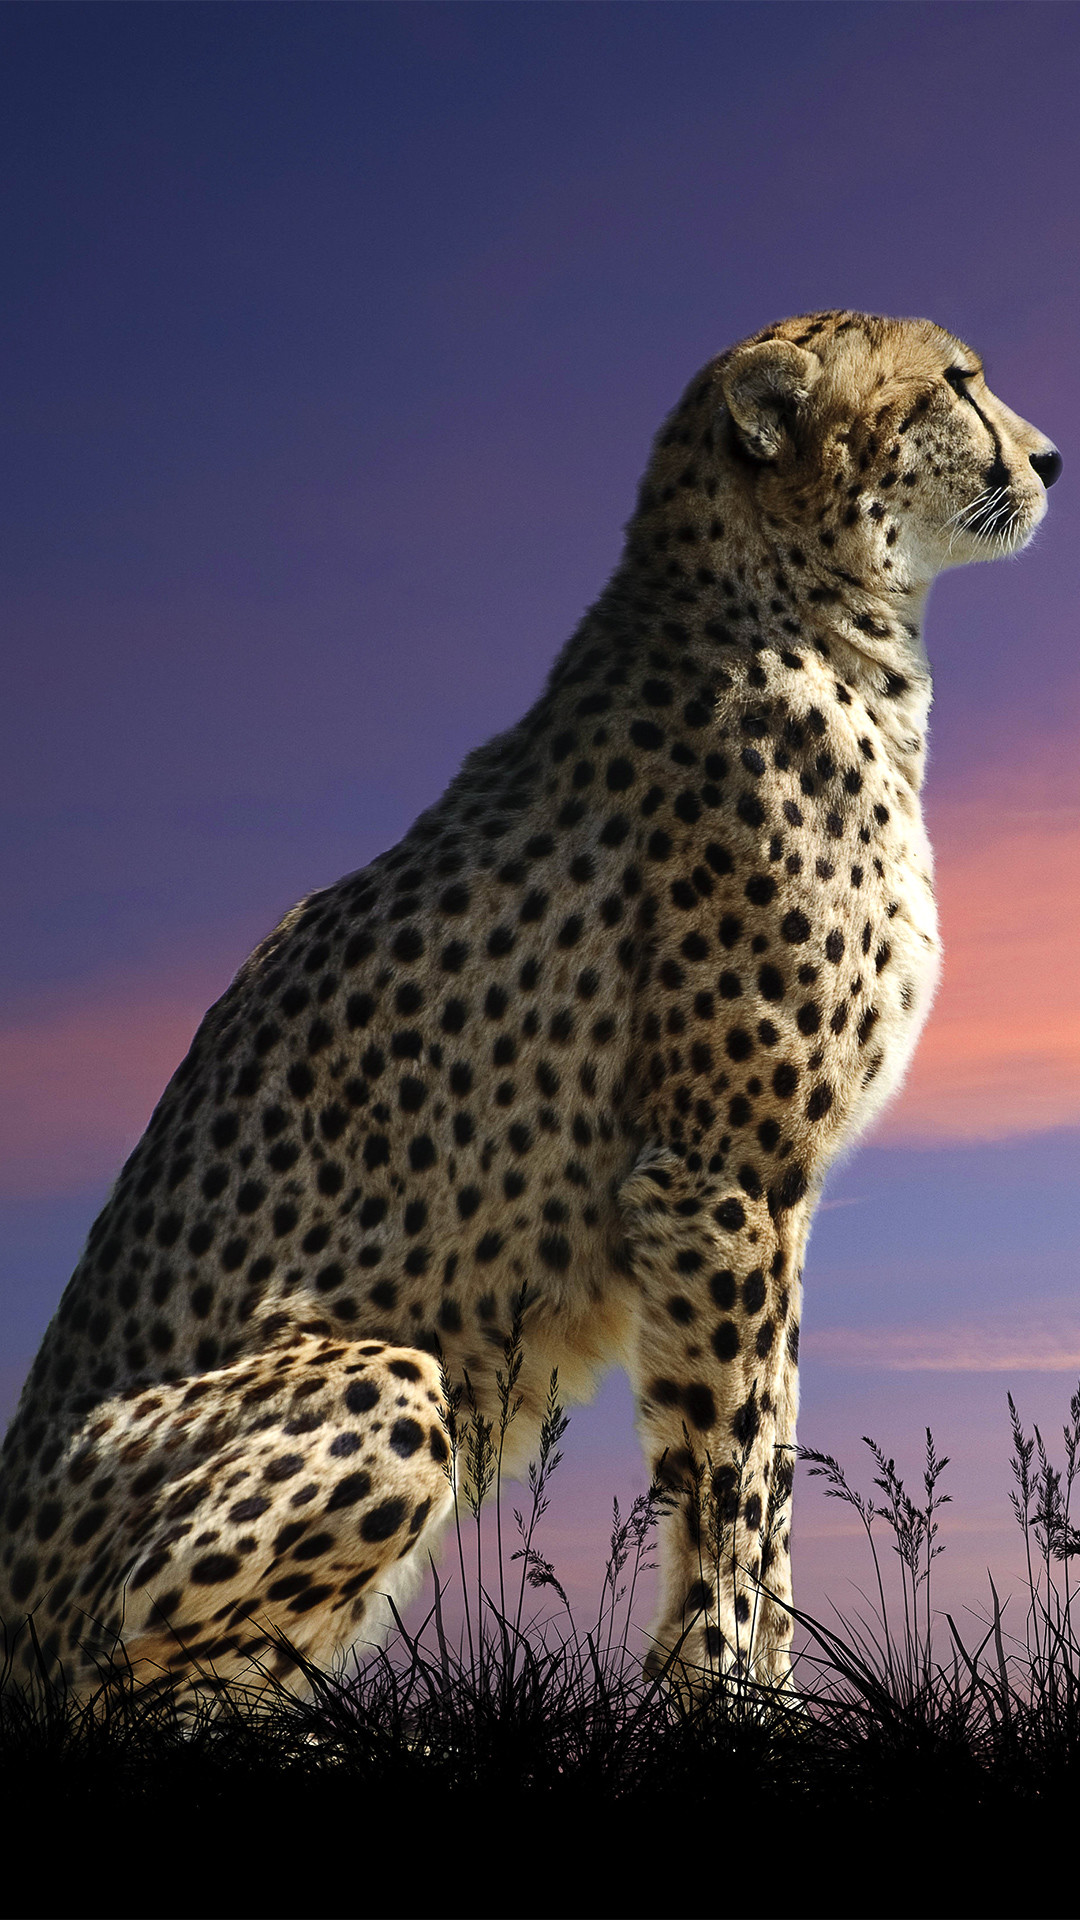 Cheetah Photos Download The BEST Free Cheetah Stock Photos  HD Images